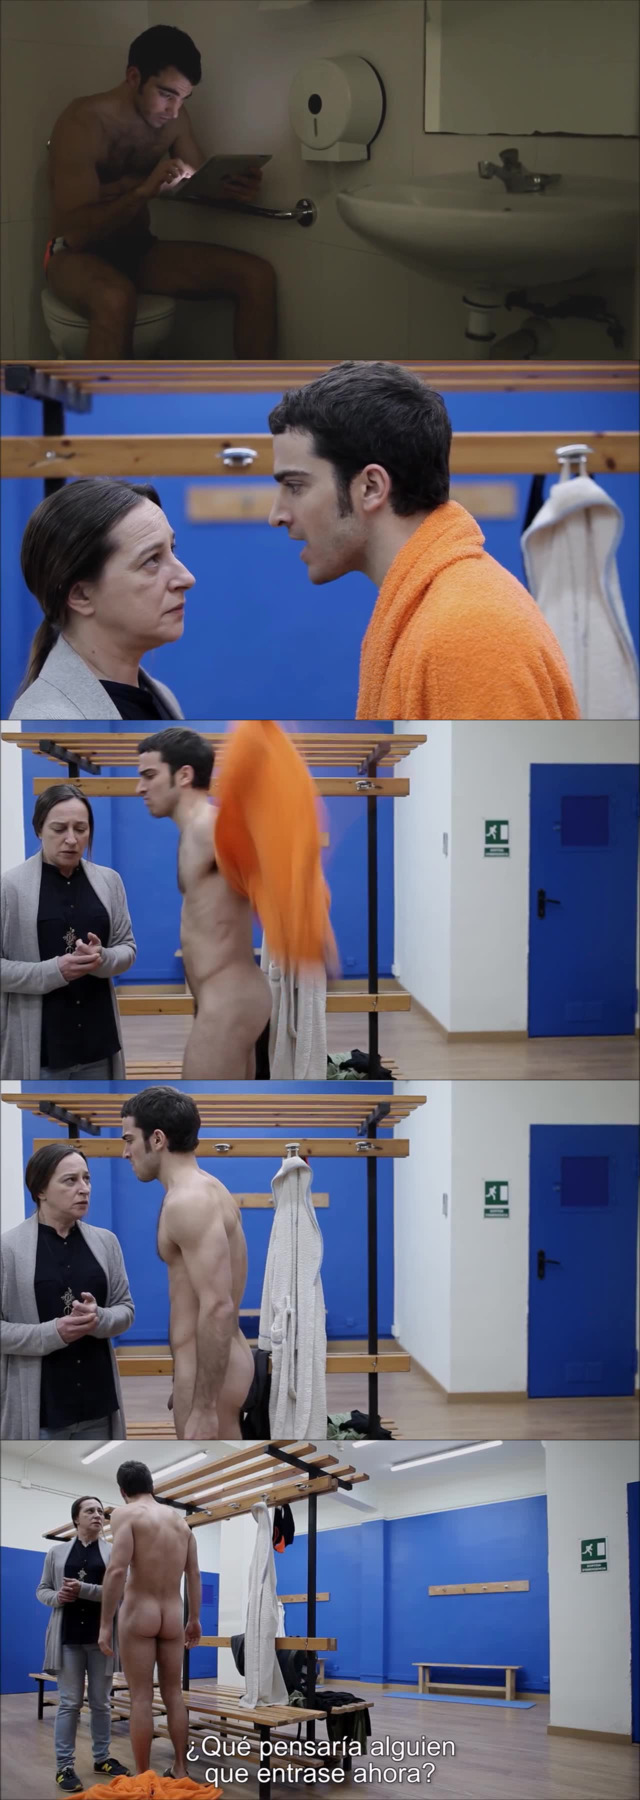 Rubén De Eguia Full Frontal Nudity Spycamfromguys Hidden Cams Spying On Men